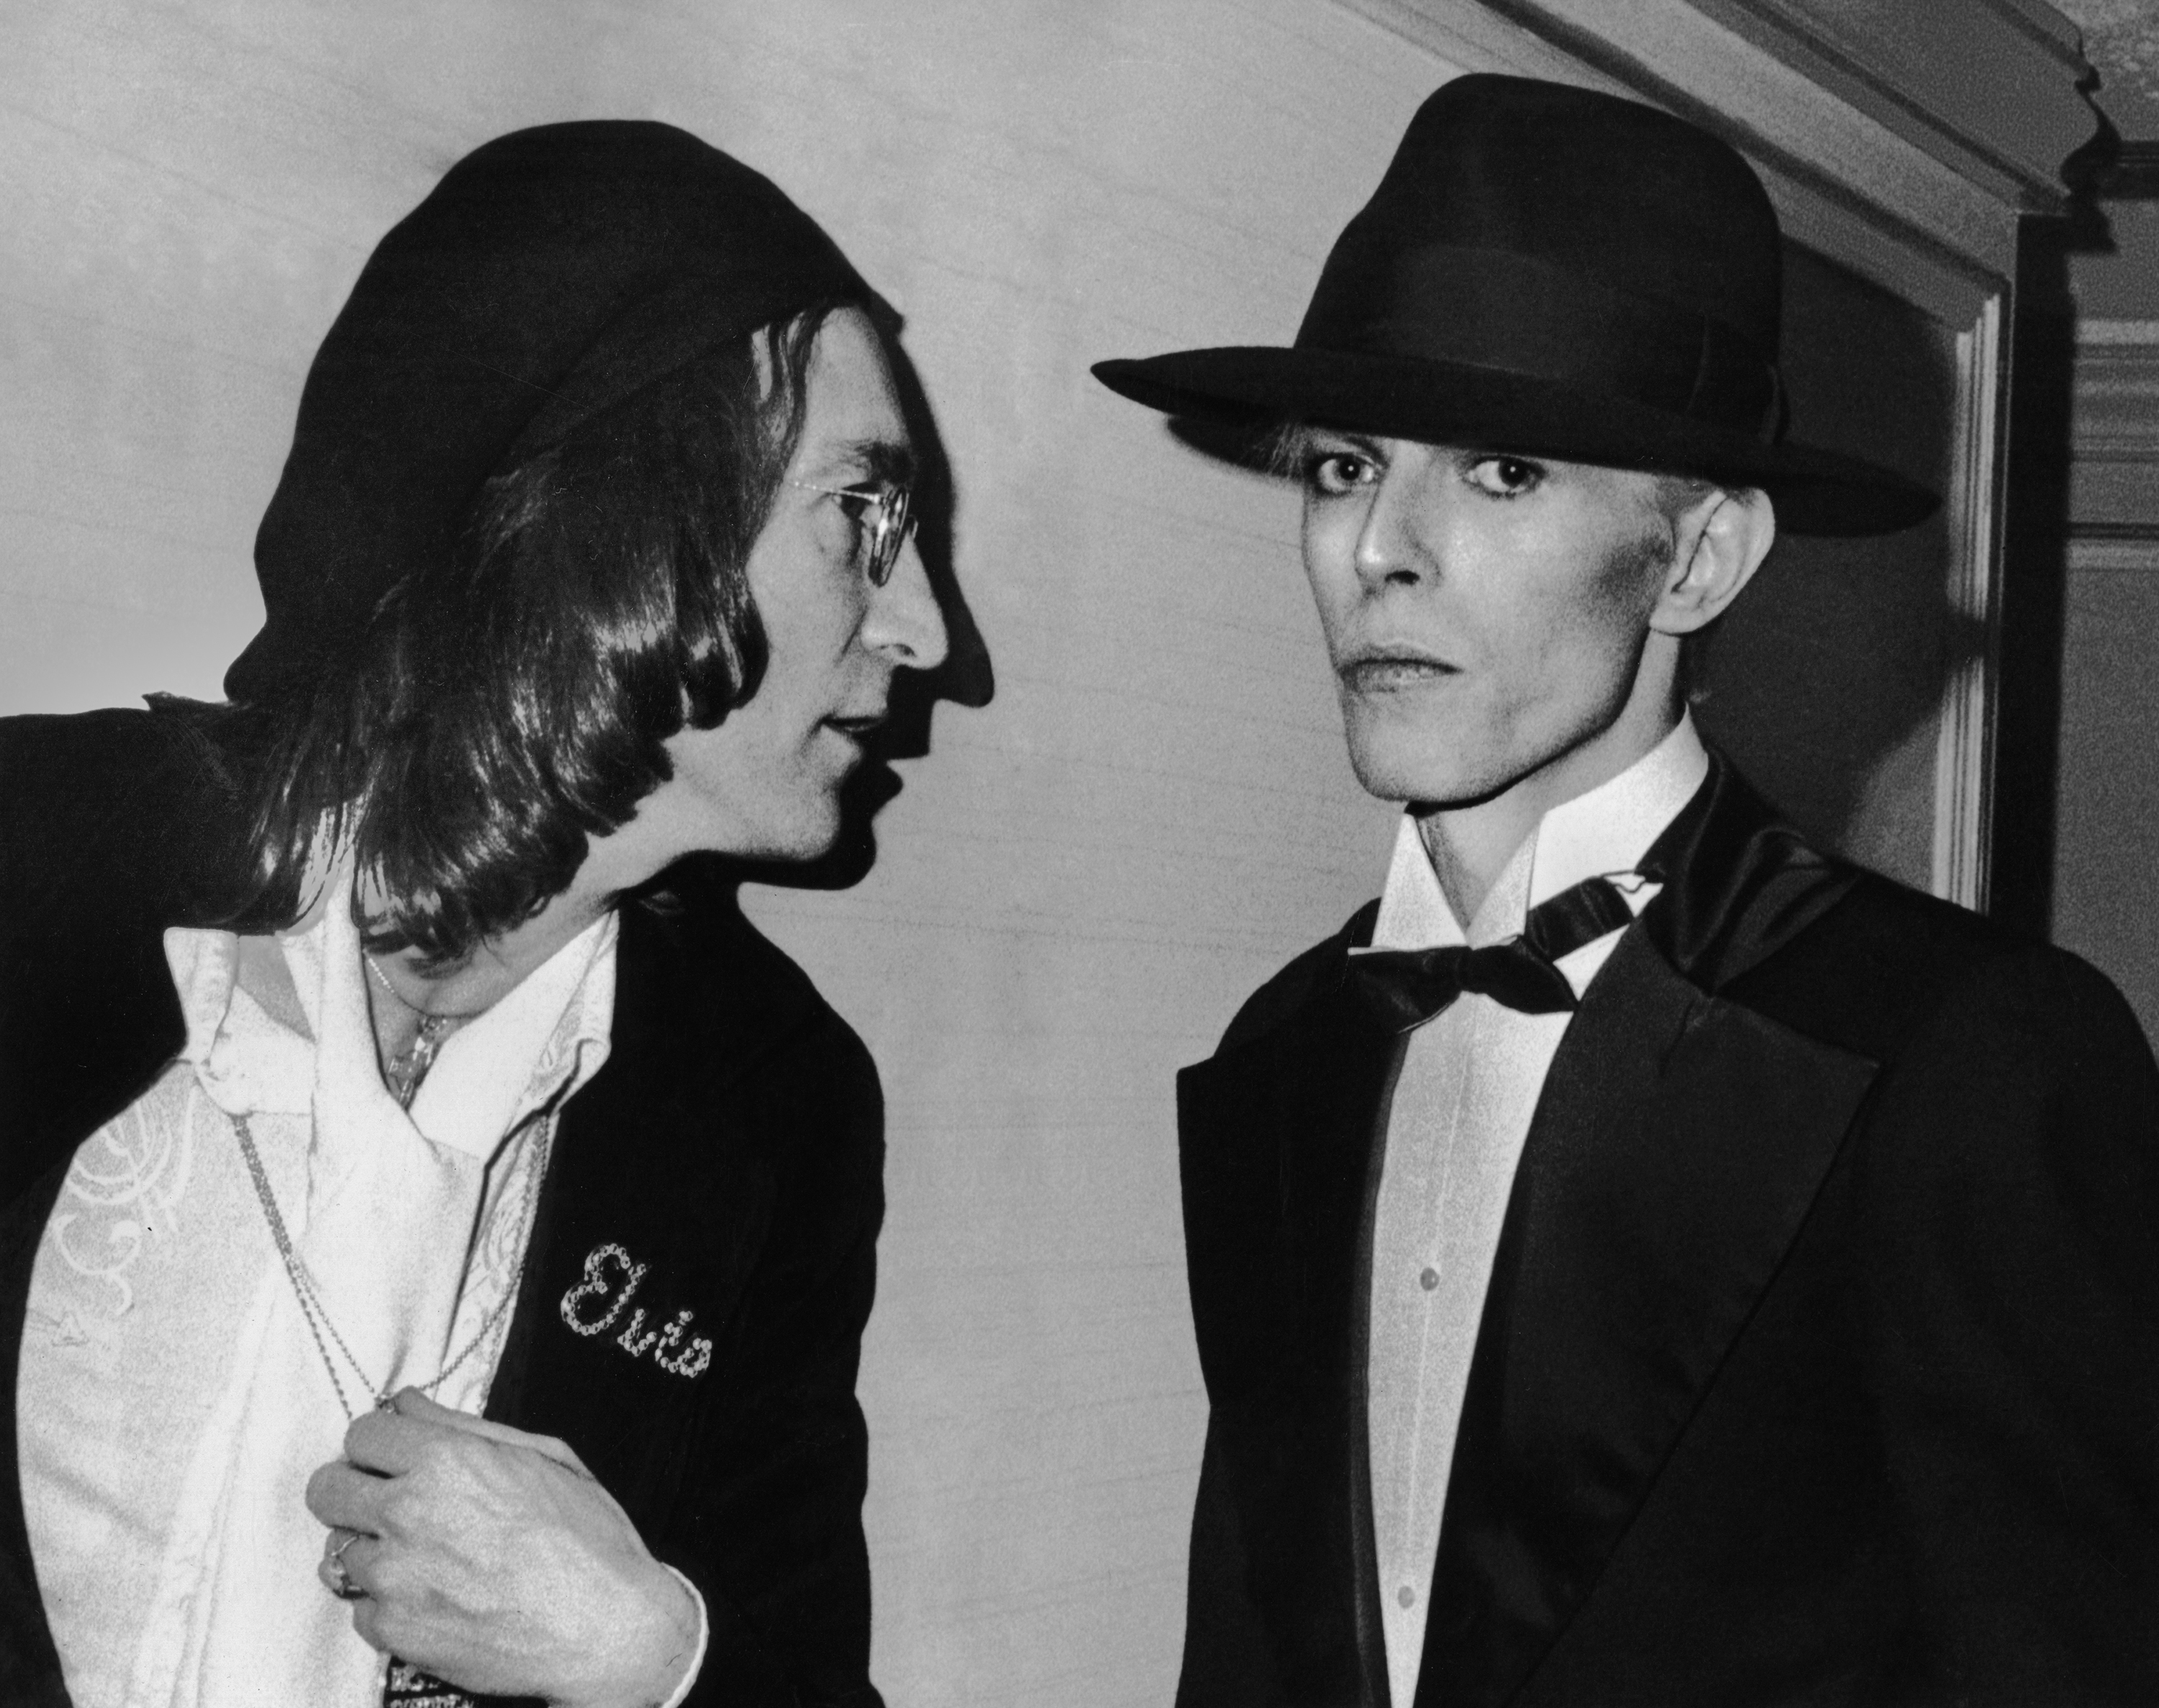 John Lennon and David Bowie